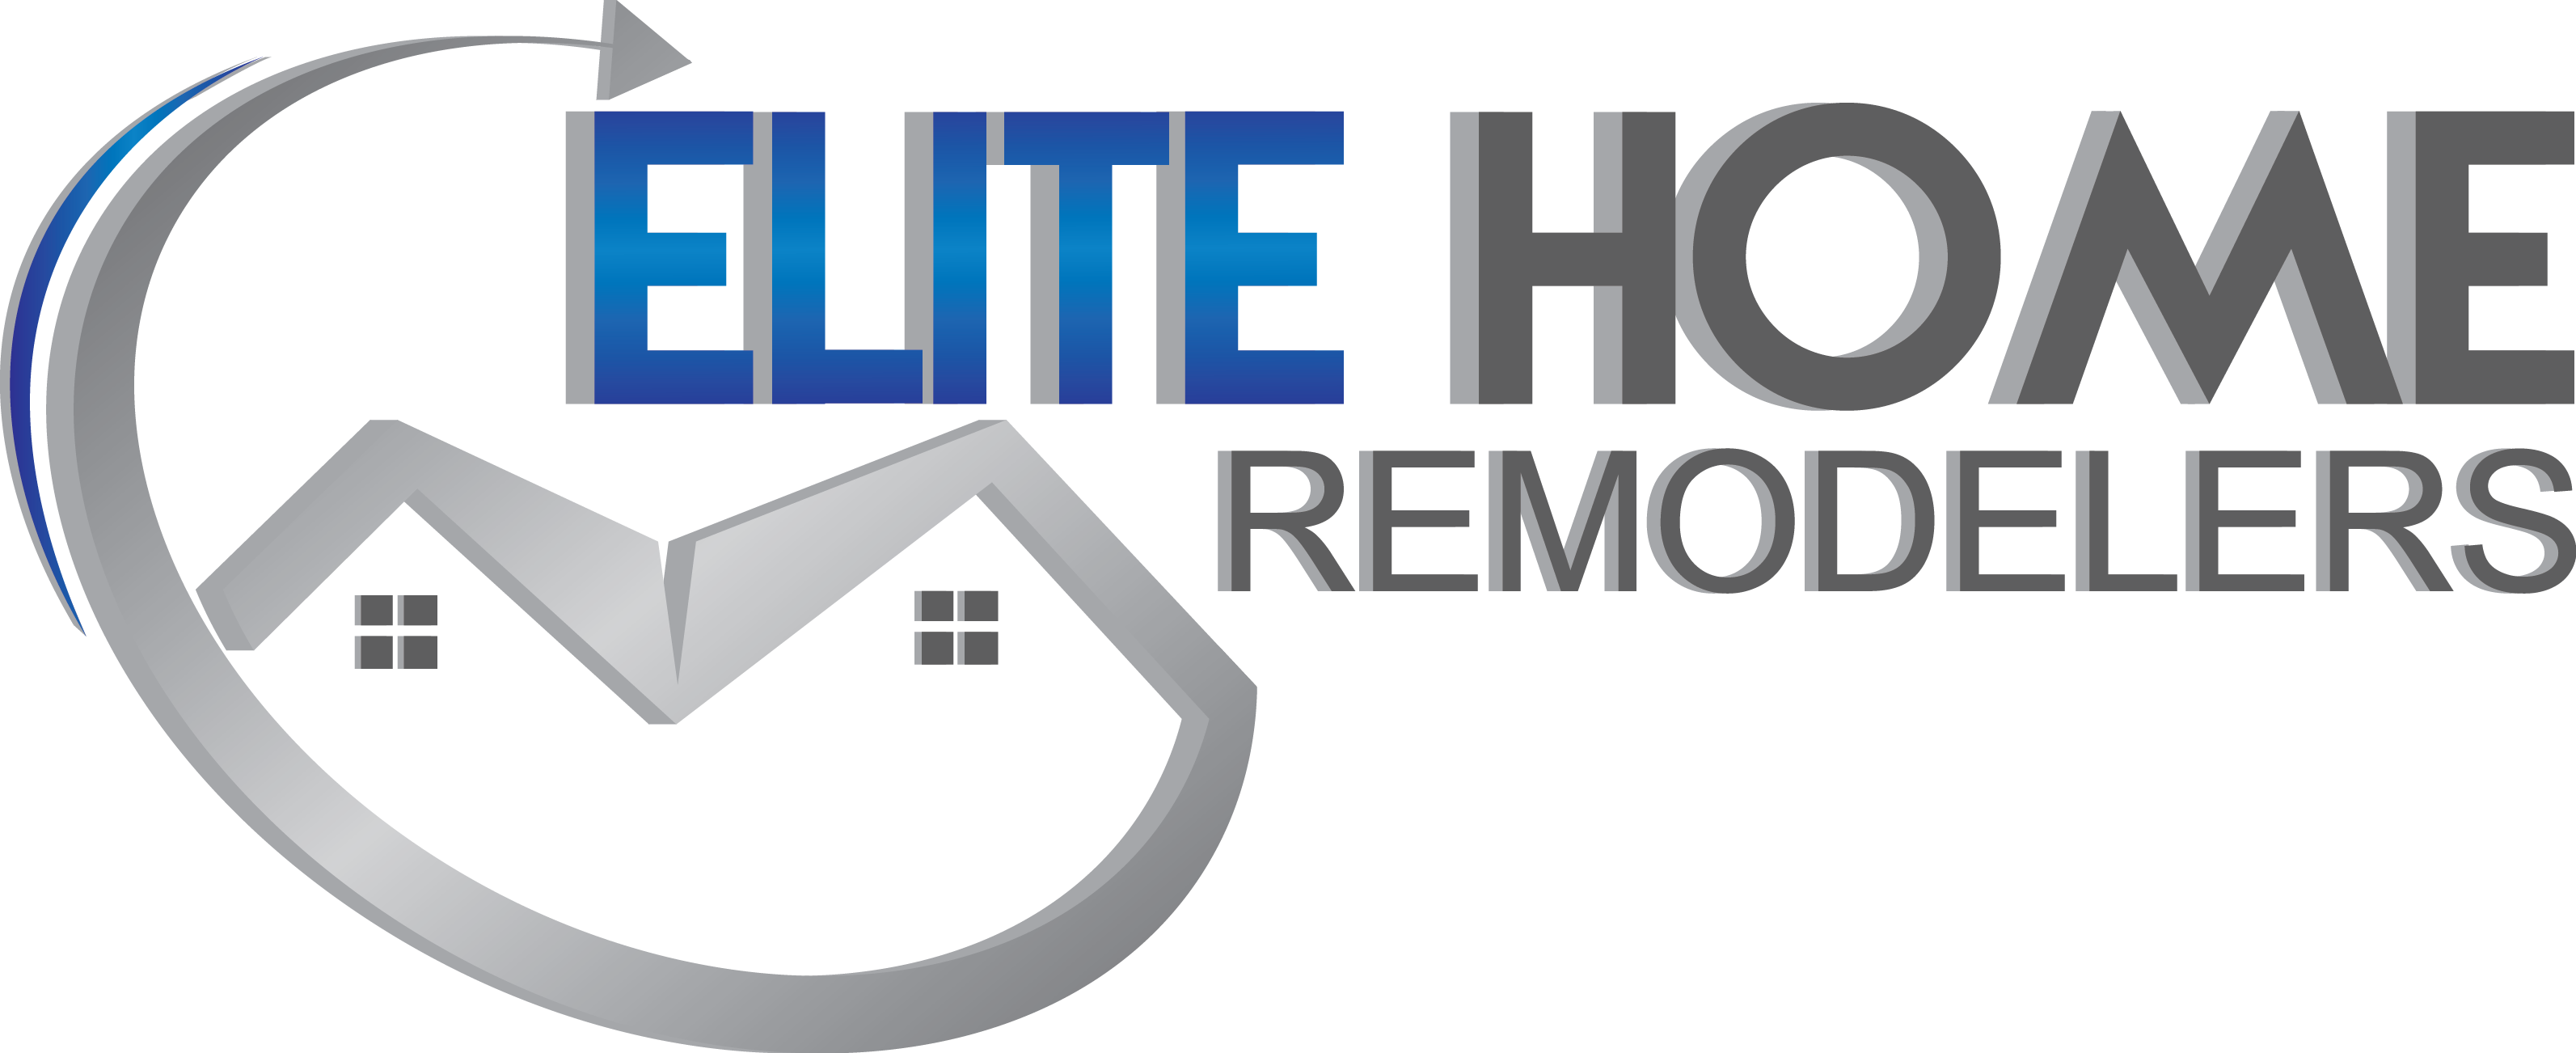 Andersen Windows from Elite Home Remodelers Inc. in Holbrook, NY | Andersen Windows Certified Contractor